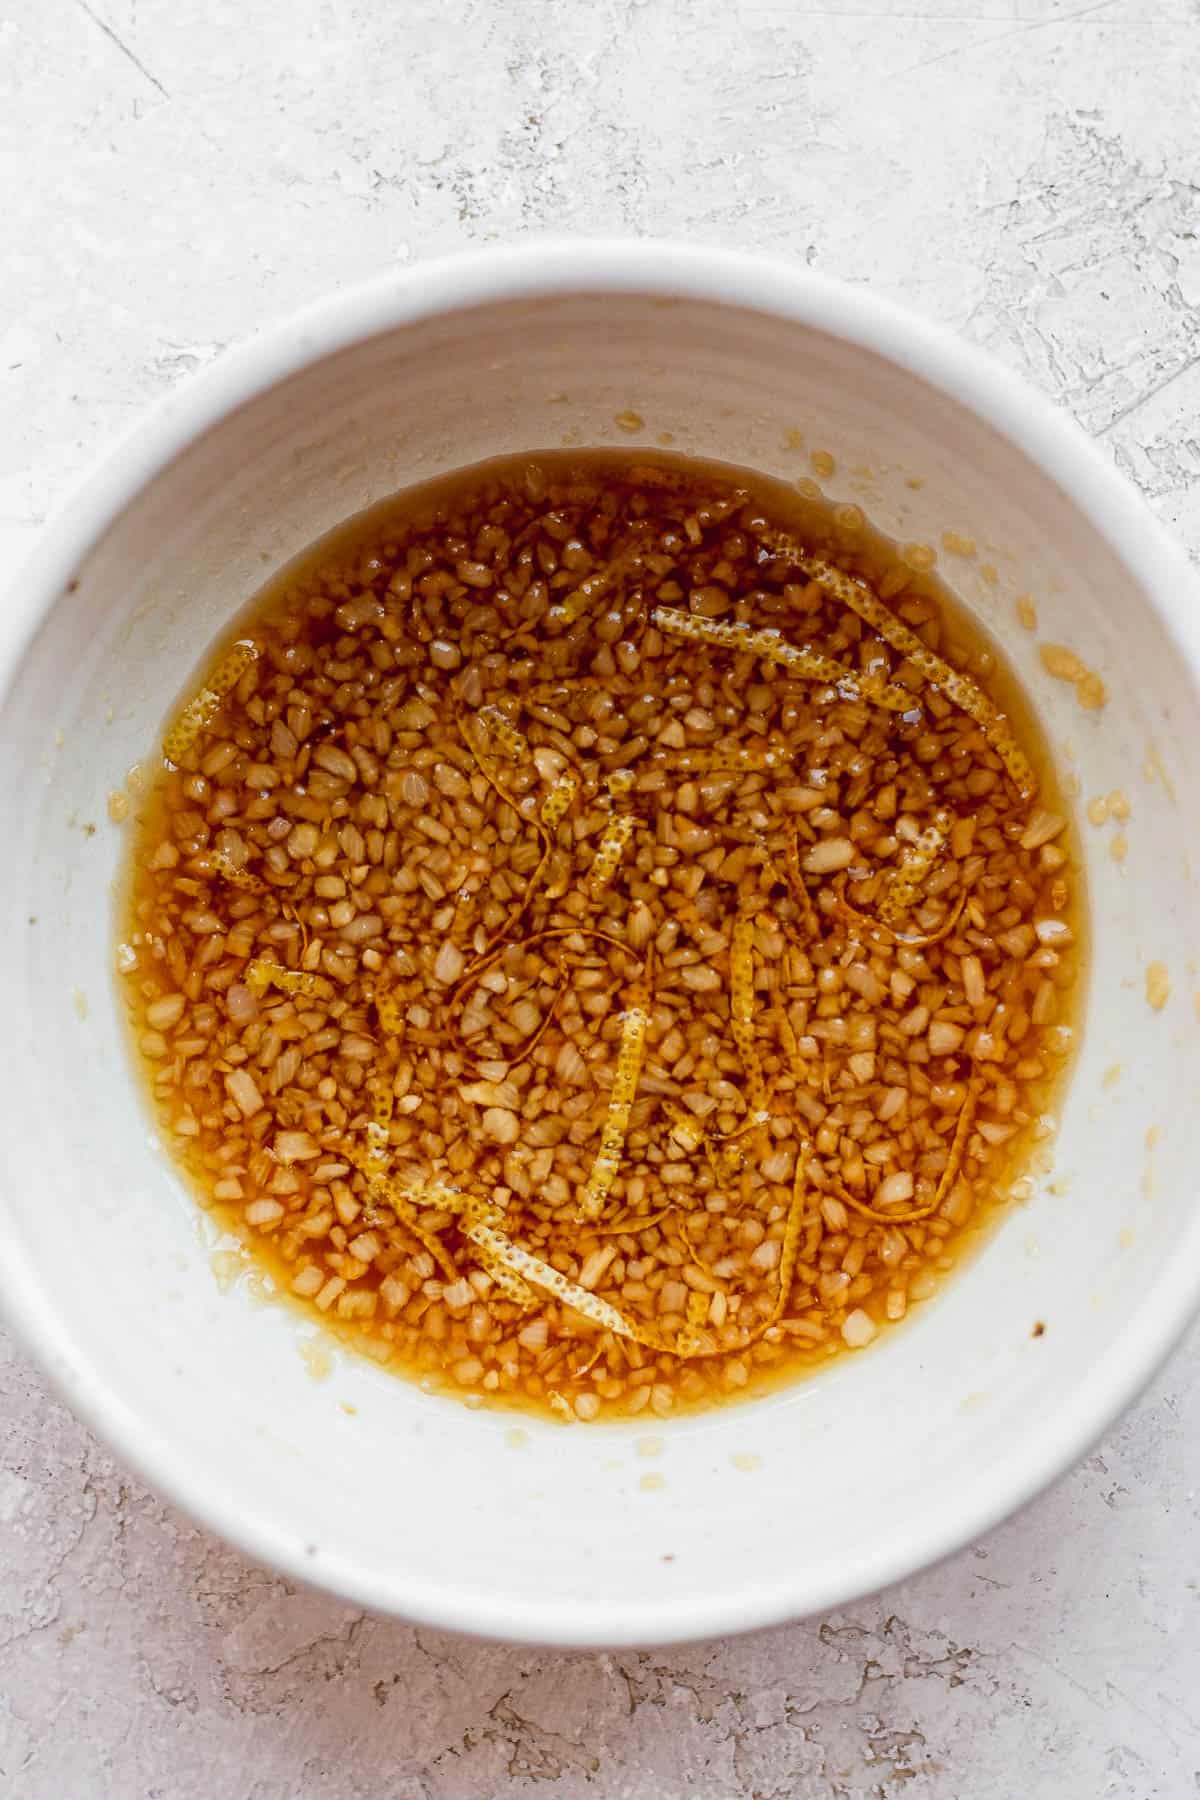 Honey garlic marinade ingredients in a bowl.